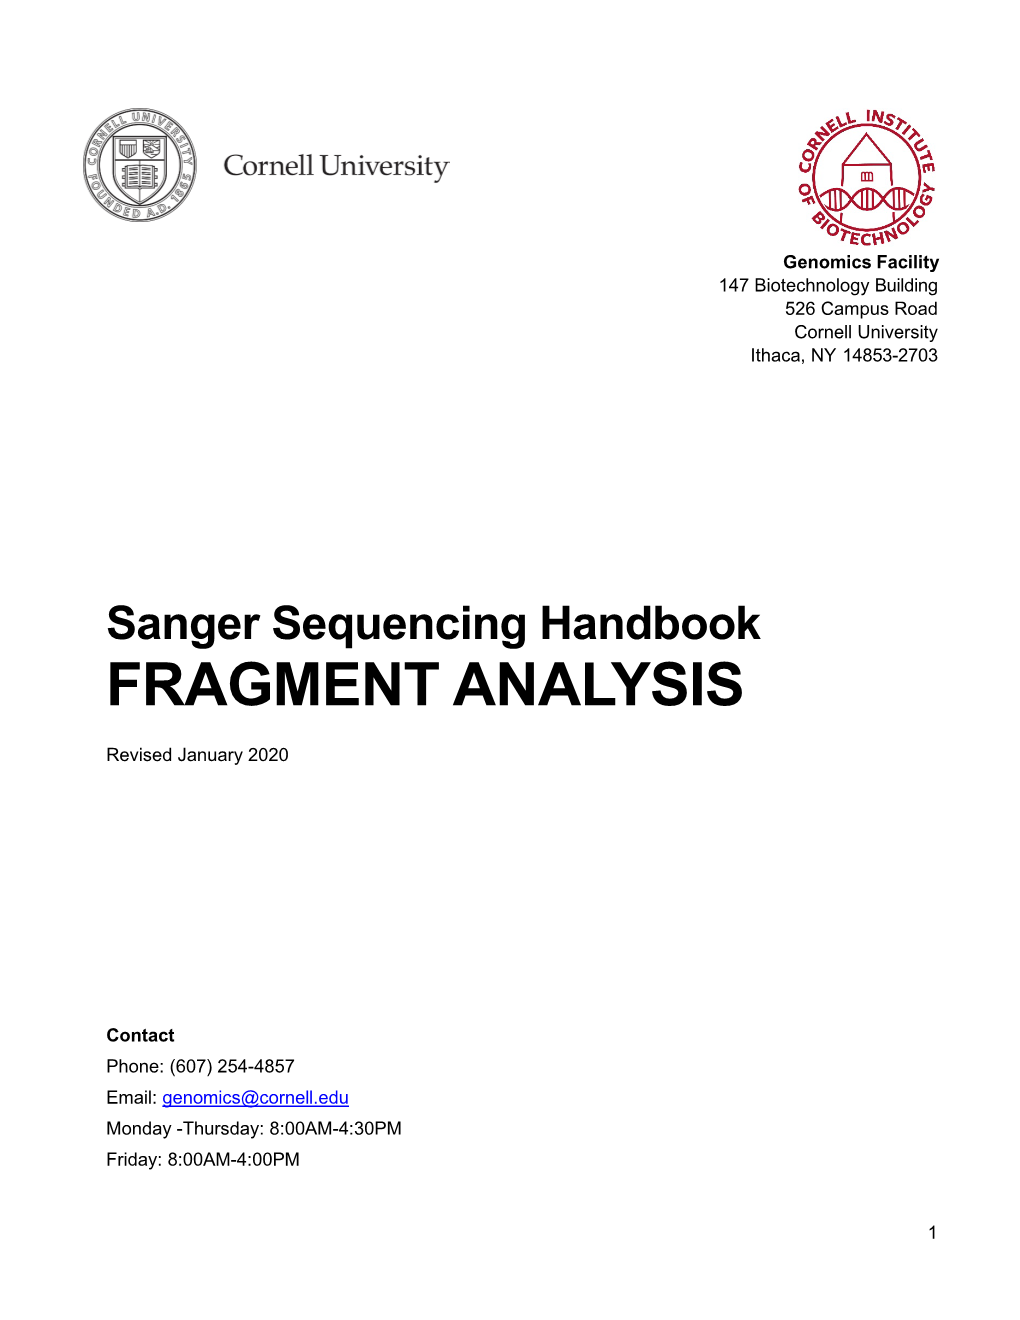 Sanger Sequencing Handbook FRAGMENT ANALYSIS